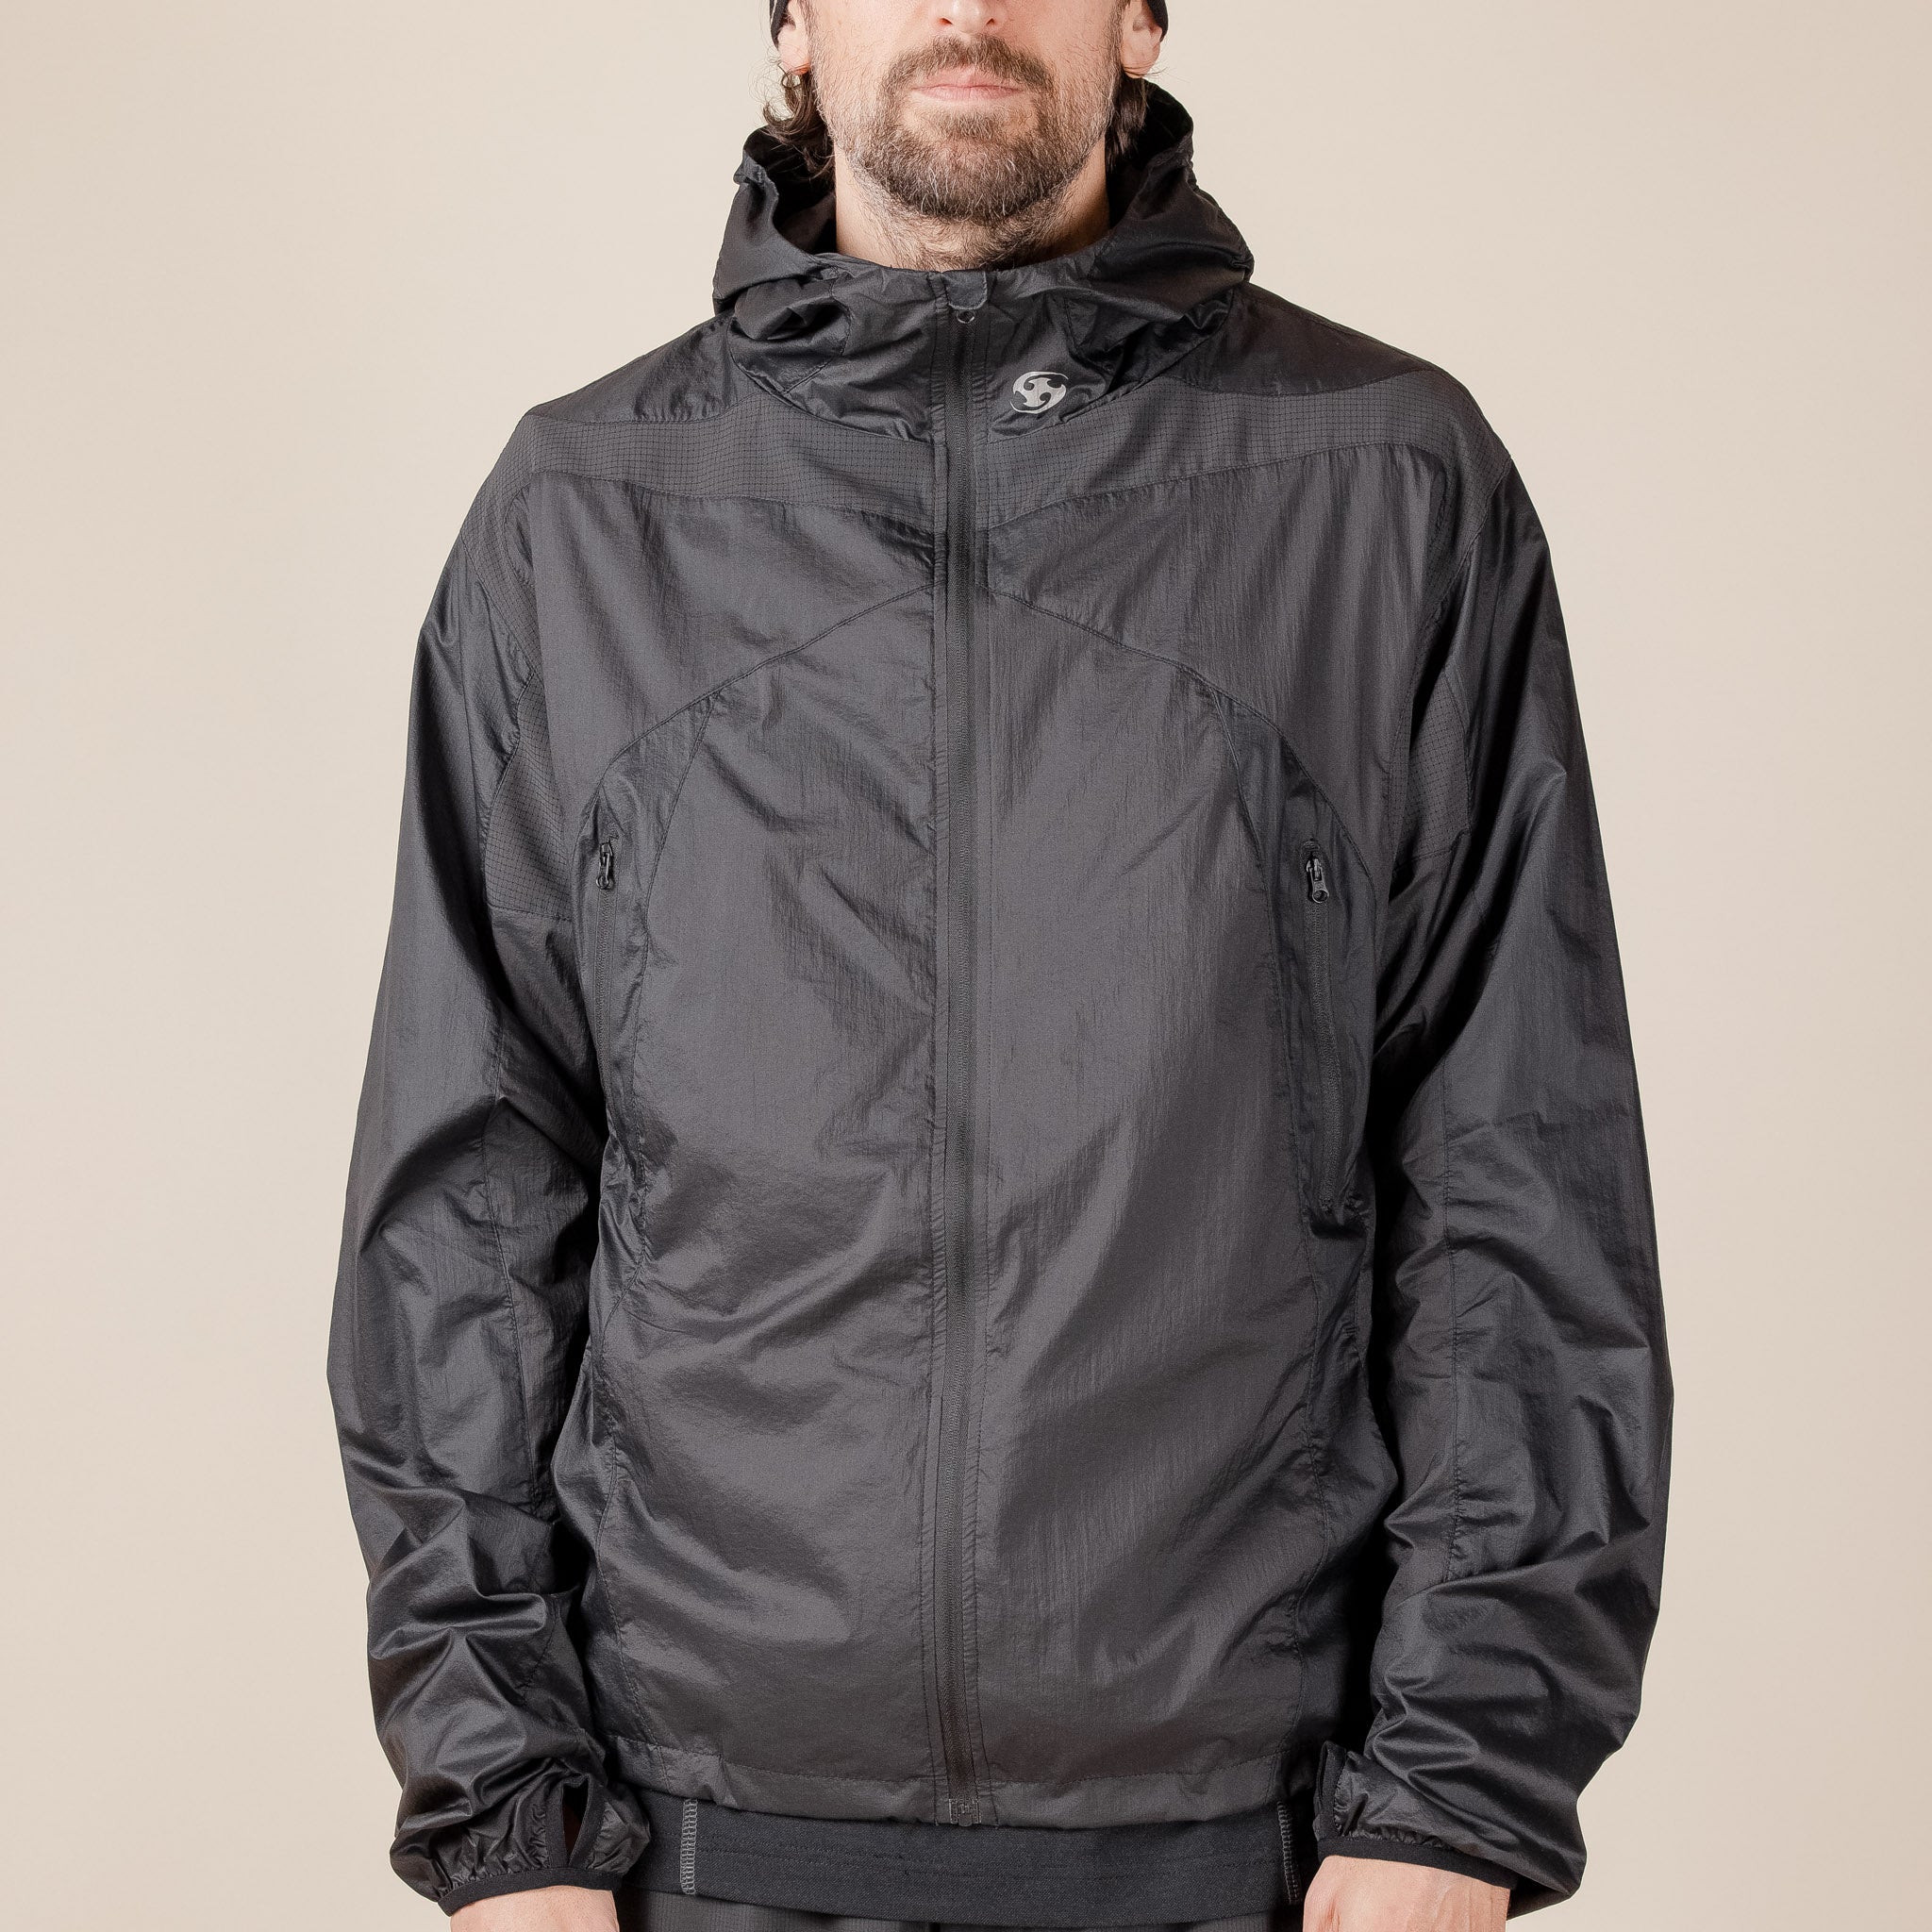 FABsansangear sprinter jacket black size 2